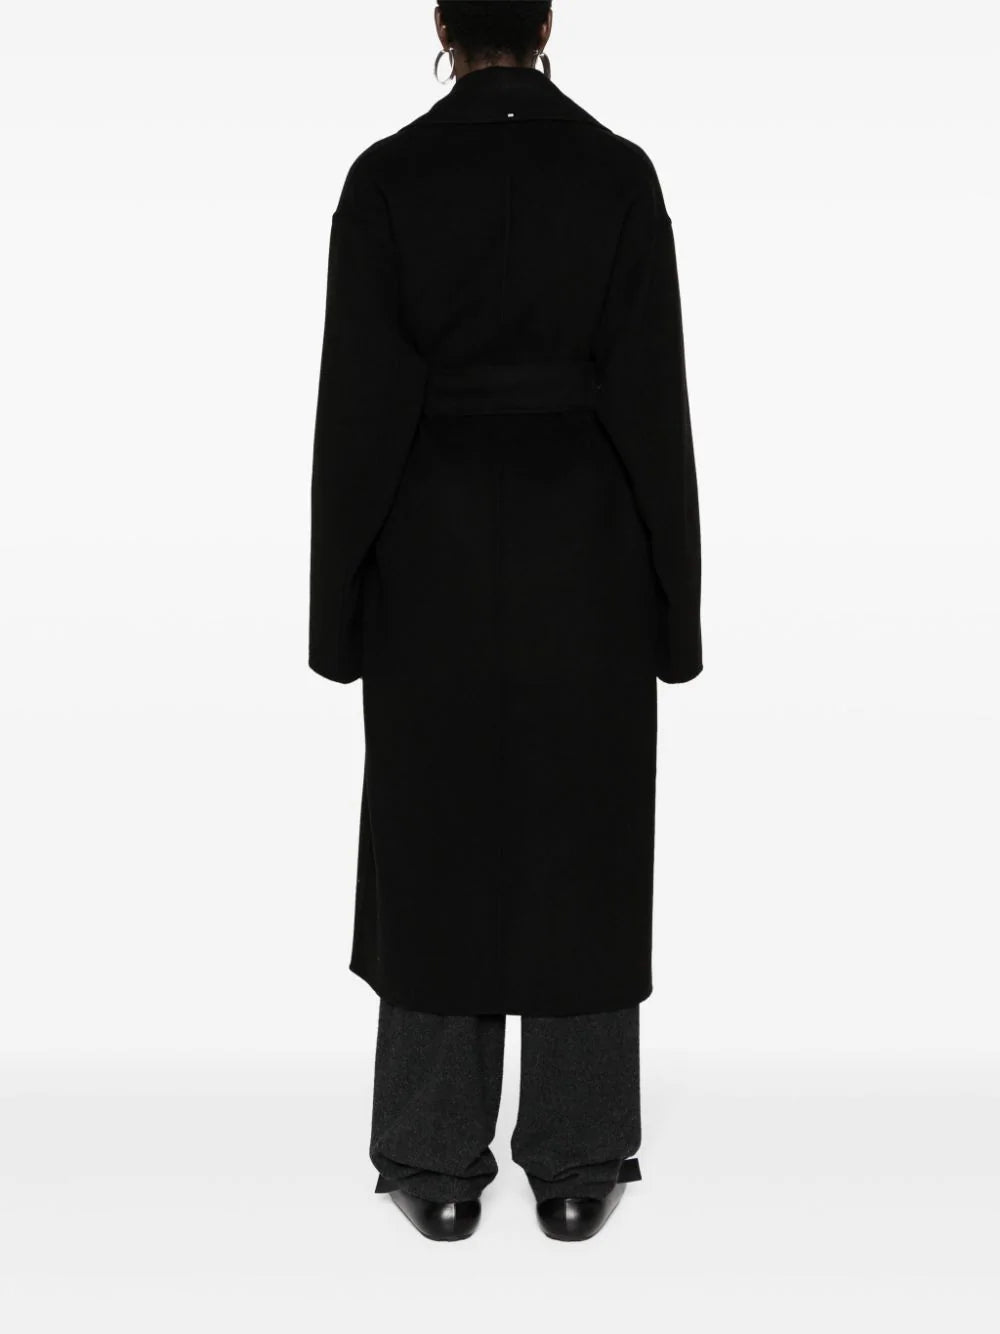 POLKA belted wool coat, black